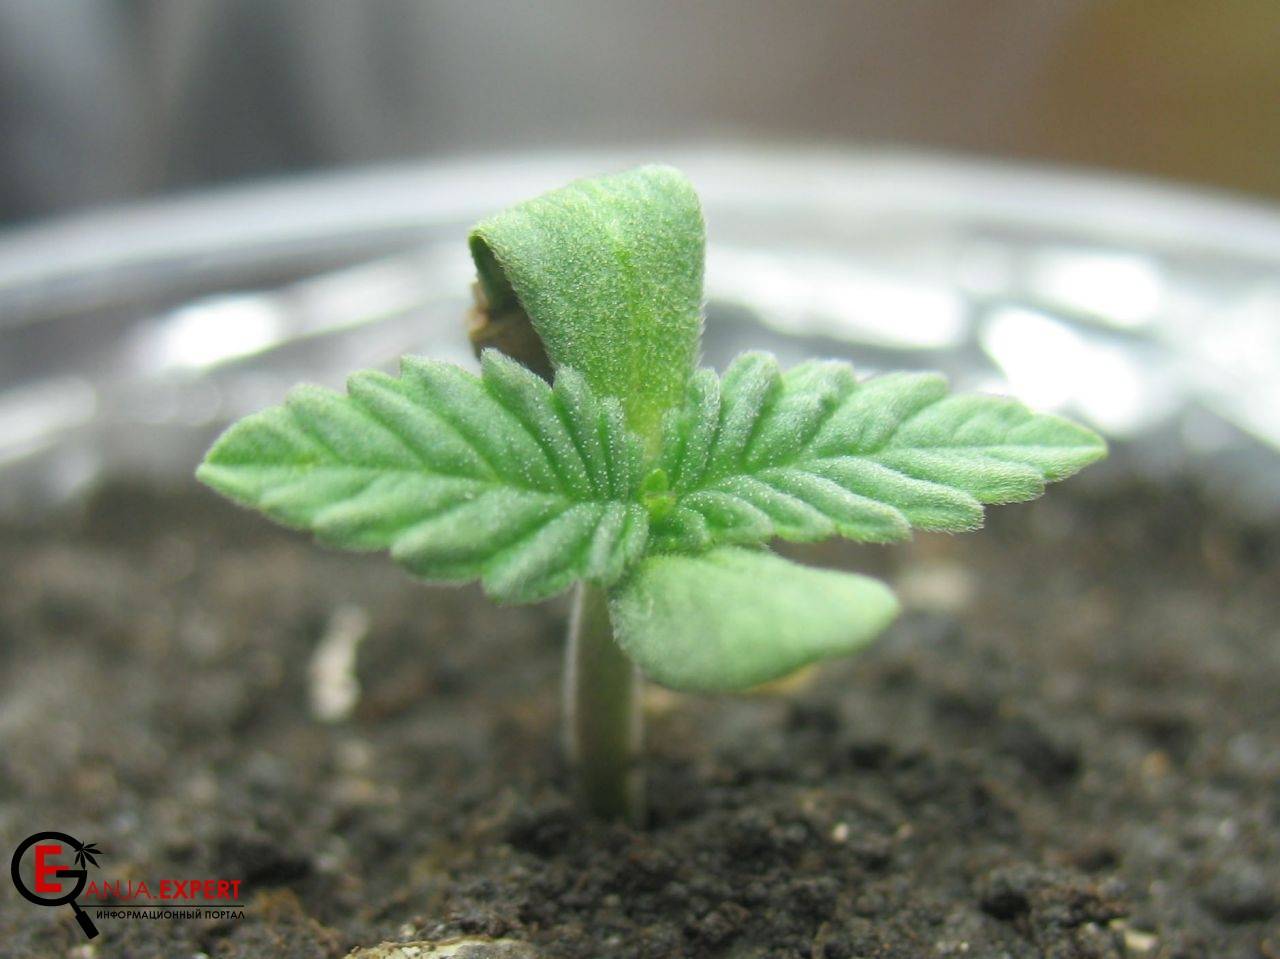 Прорастание семян марихуаны каталог тор браузер hyrda вход